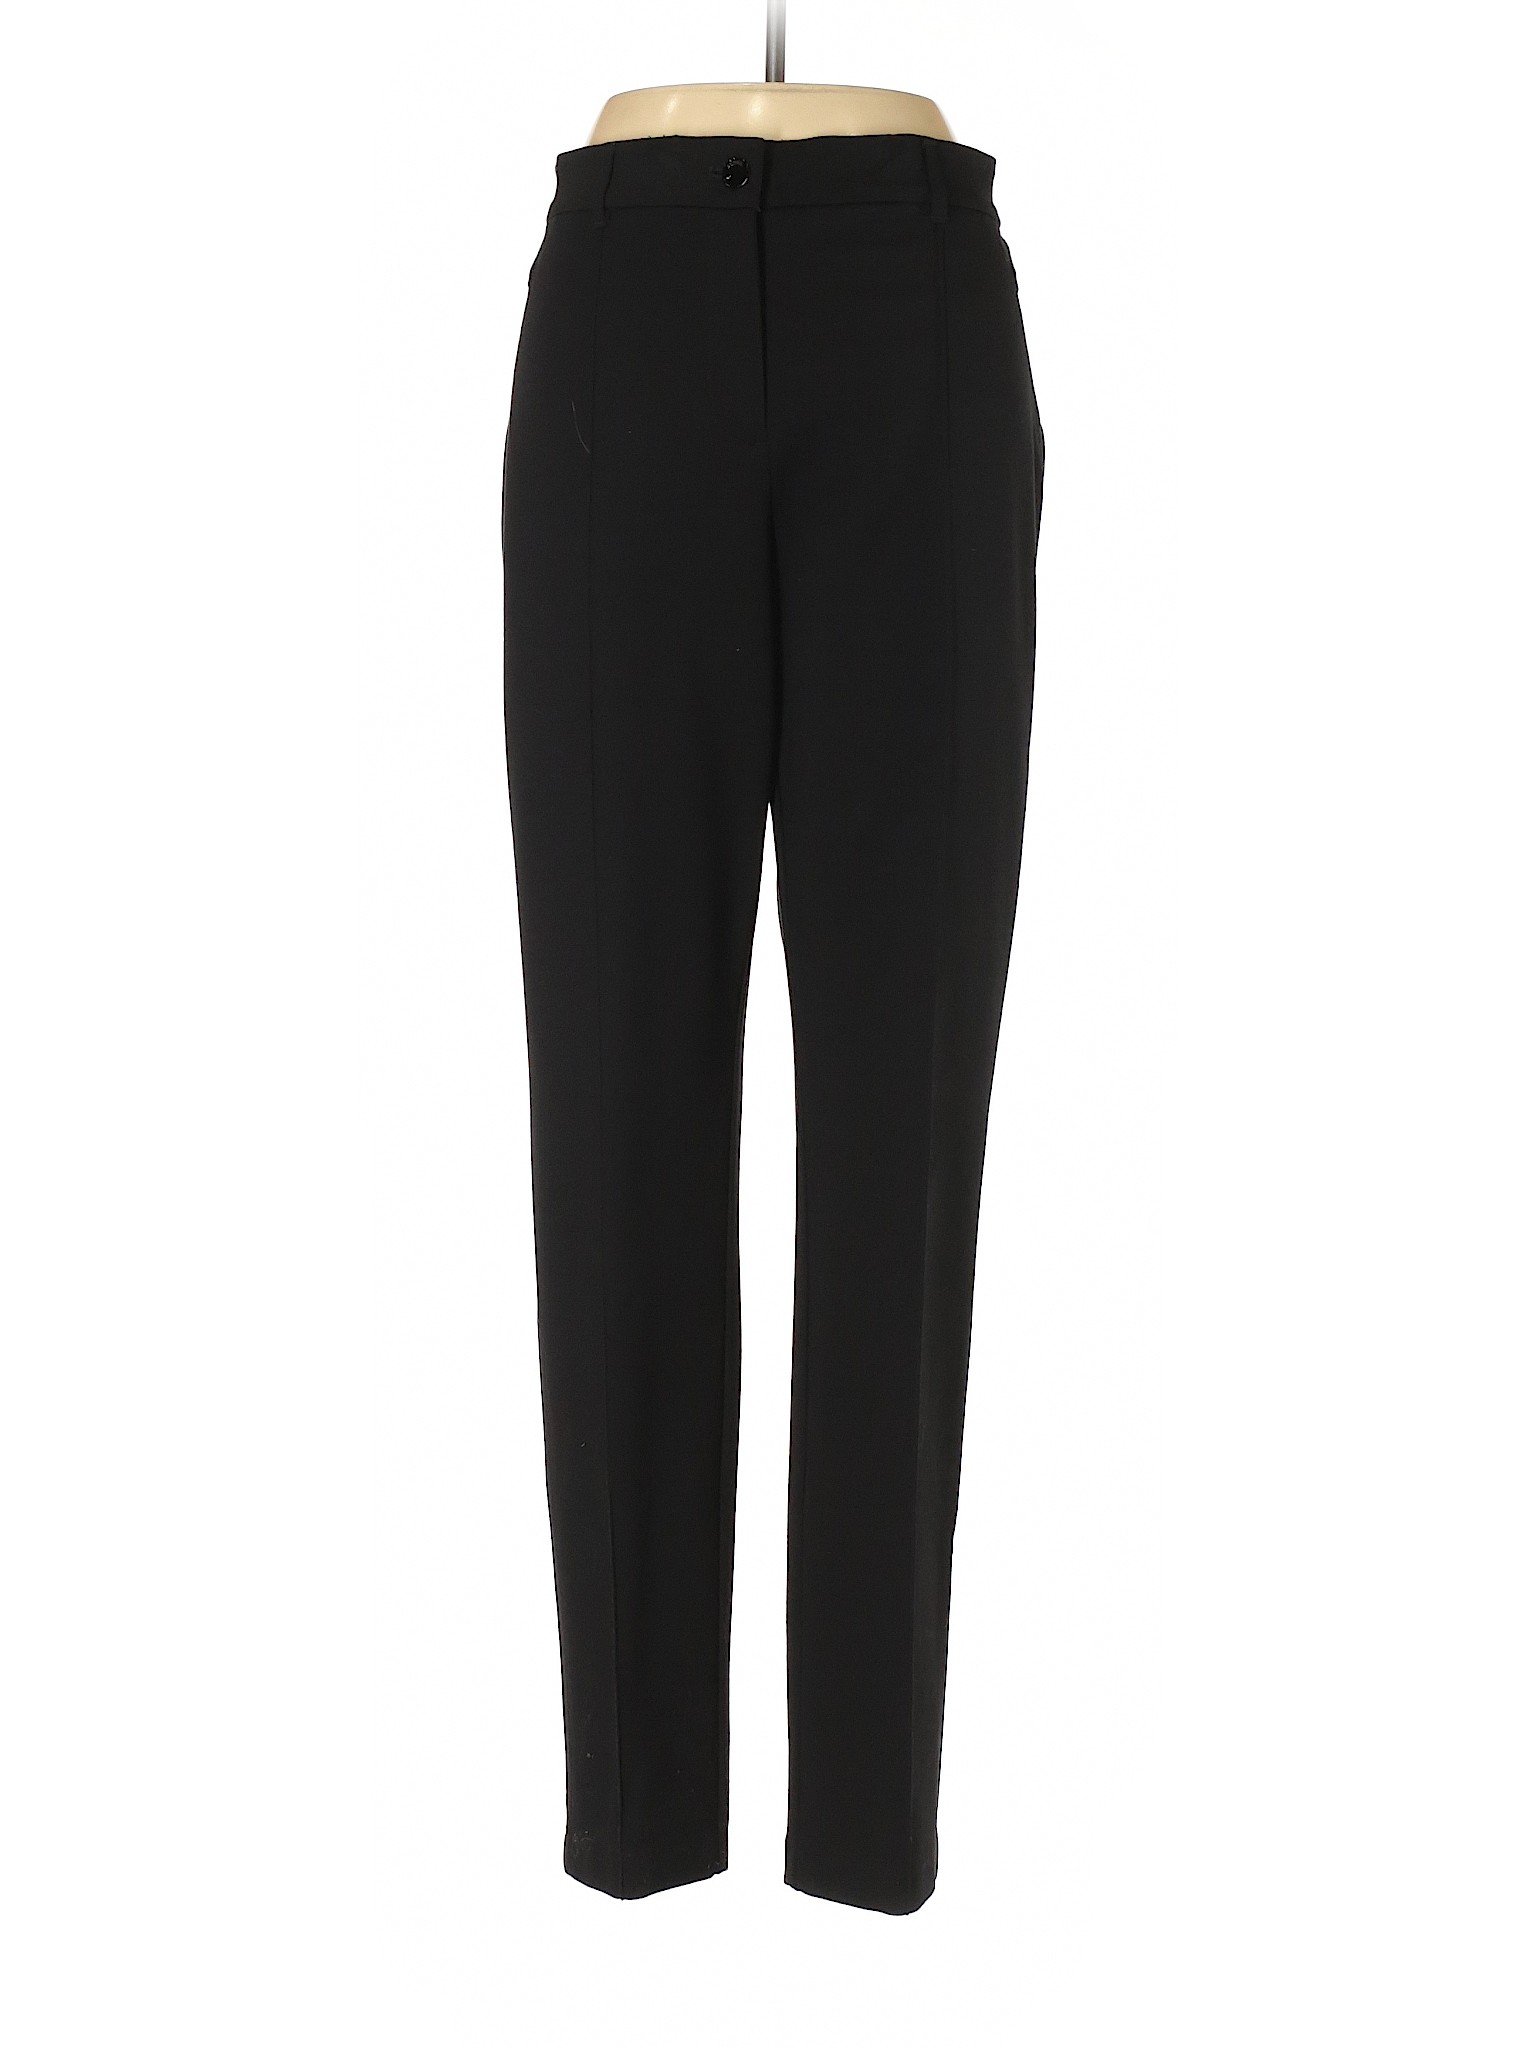 So Slimming by Chico's Women Black Dress Pants M | eBay